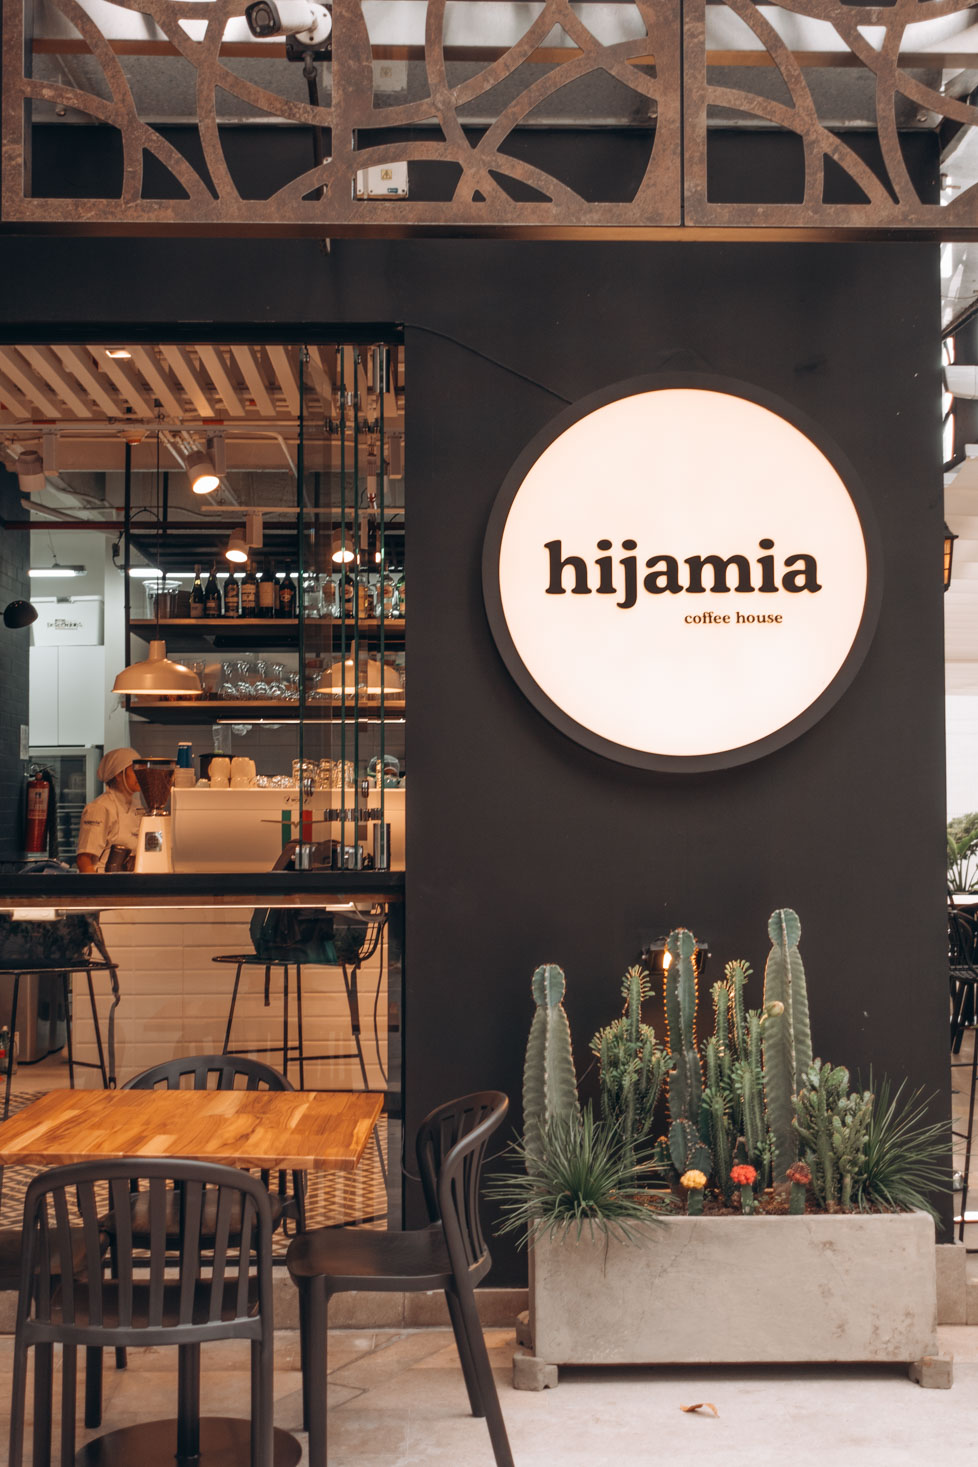 hijamia coffee house - medellin